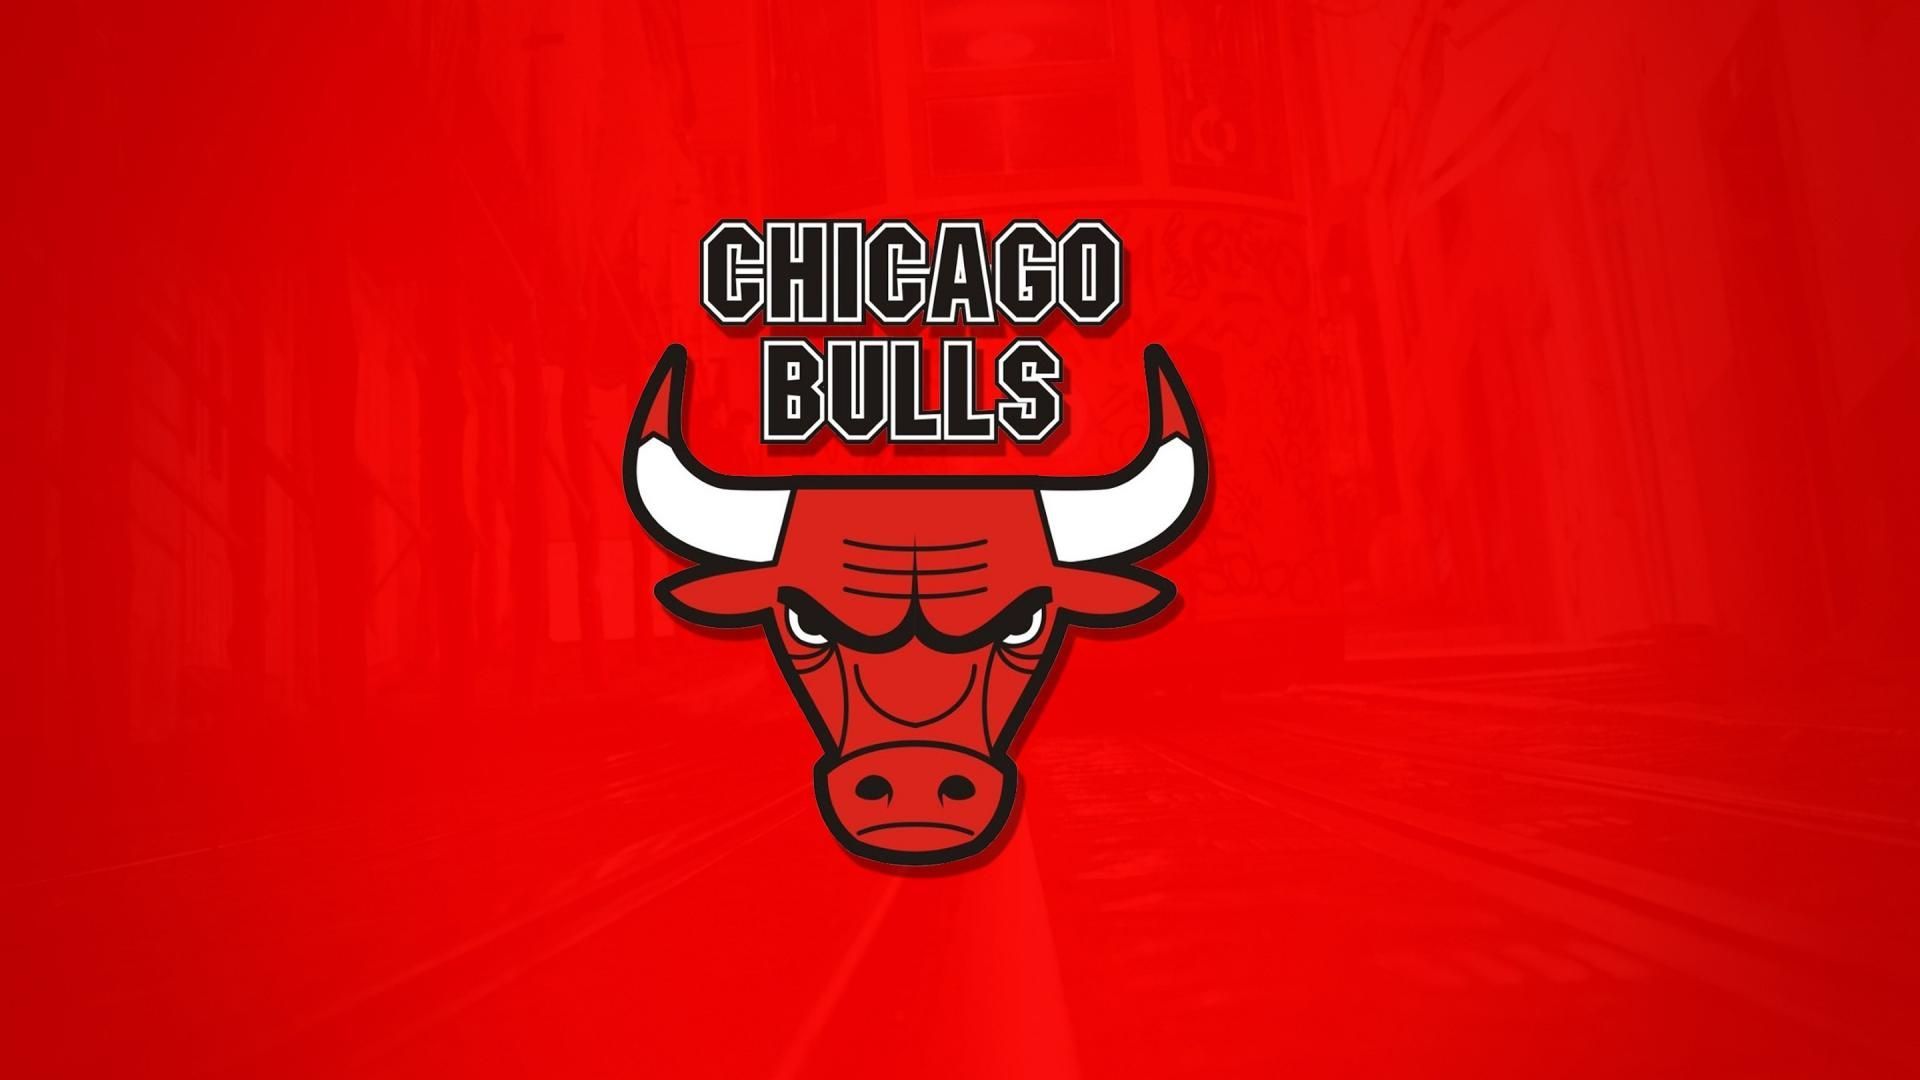 Chicago Bulls 2019 Desktop Wallpaper .com